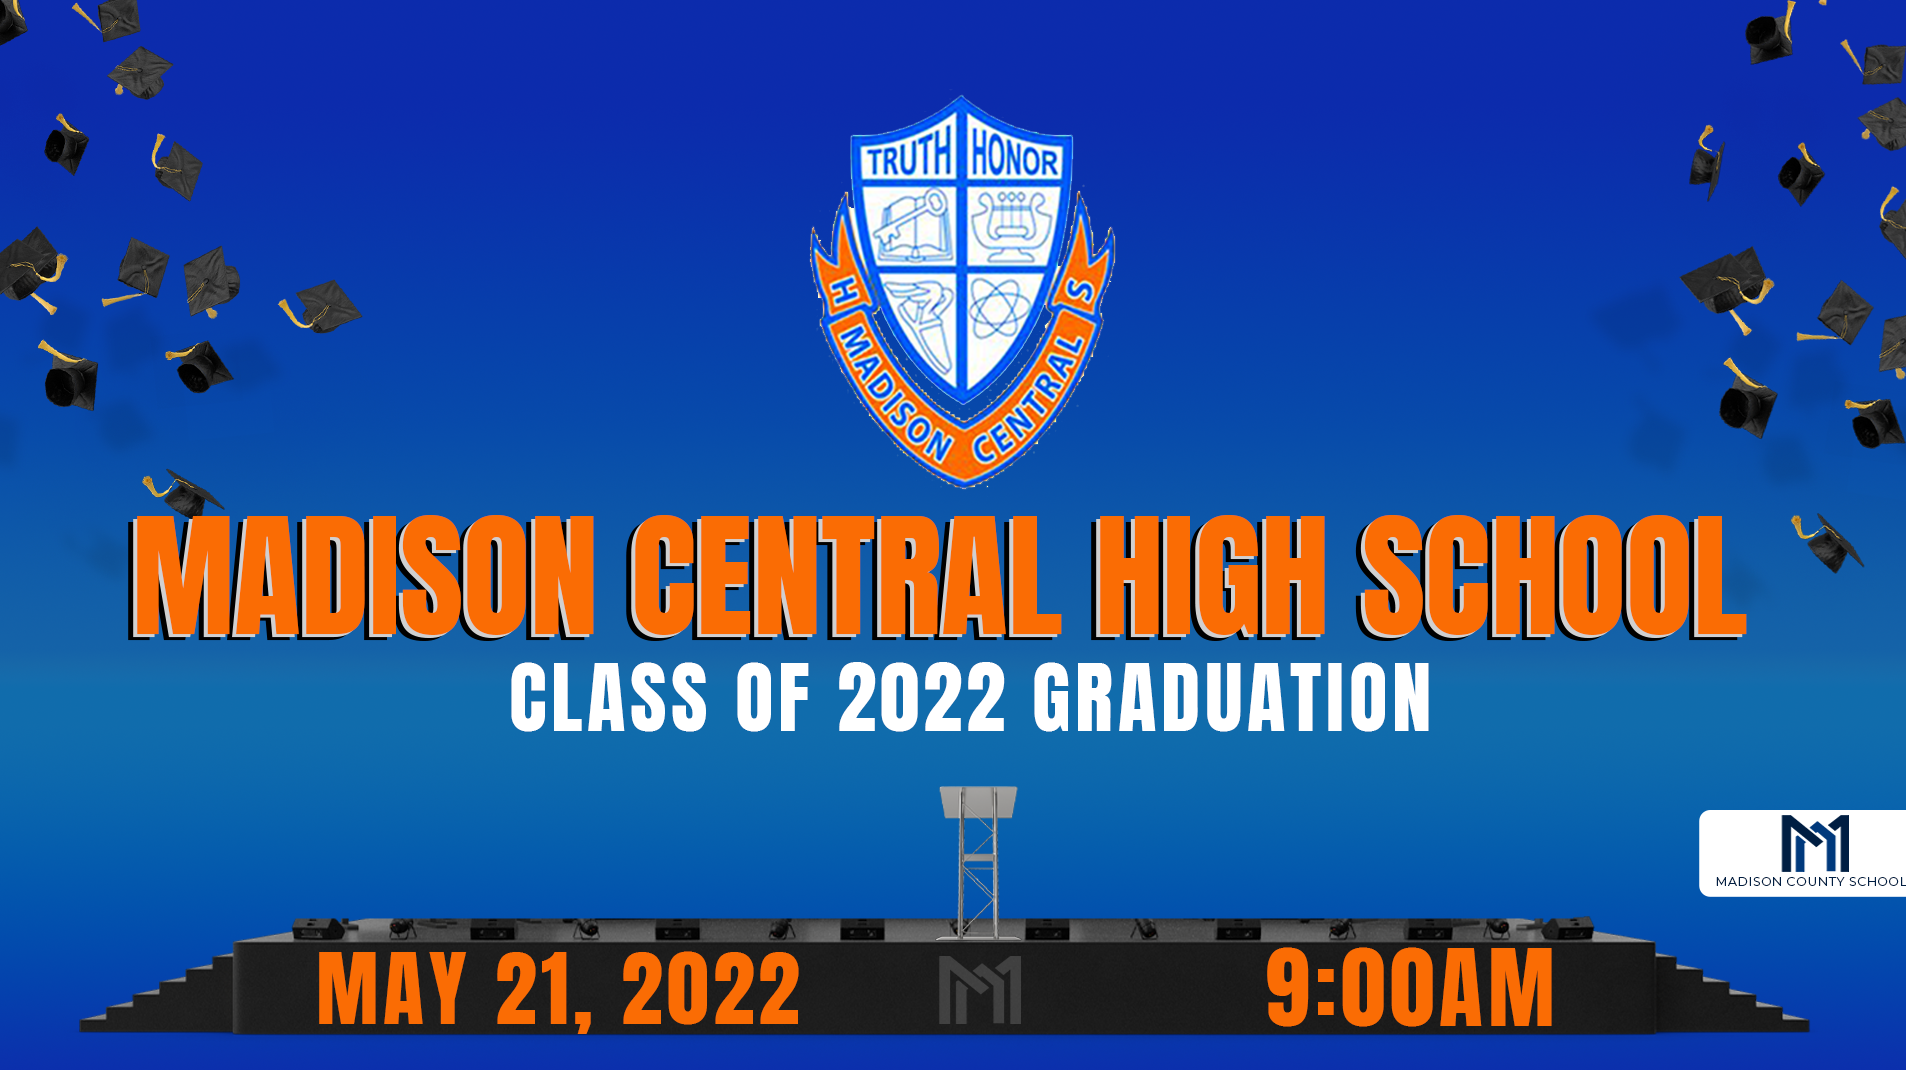 Madison Central High School Graduation Class of 2022 on Livestream